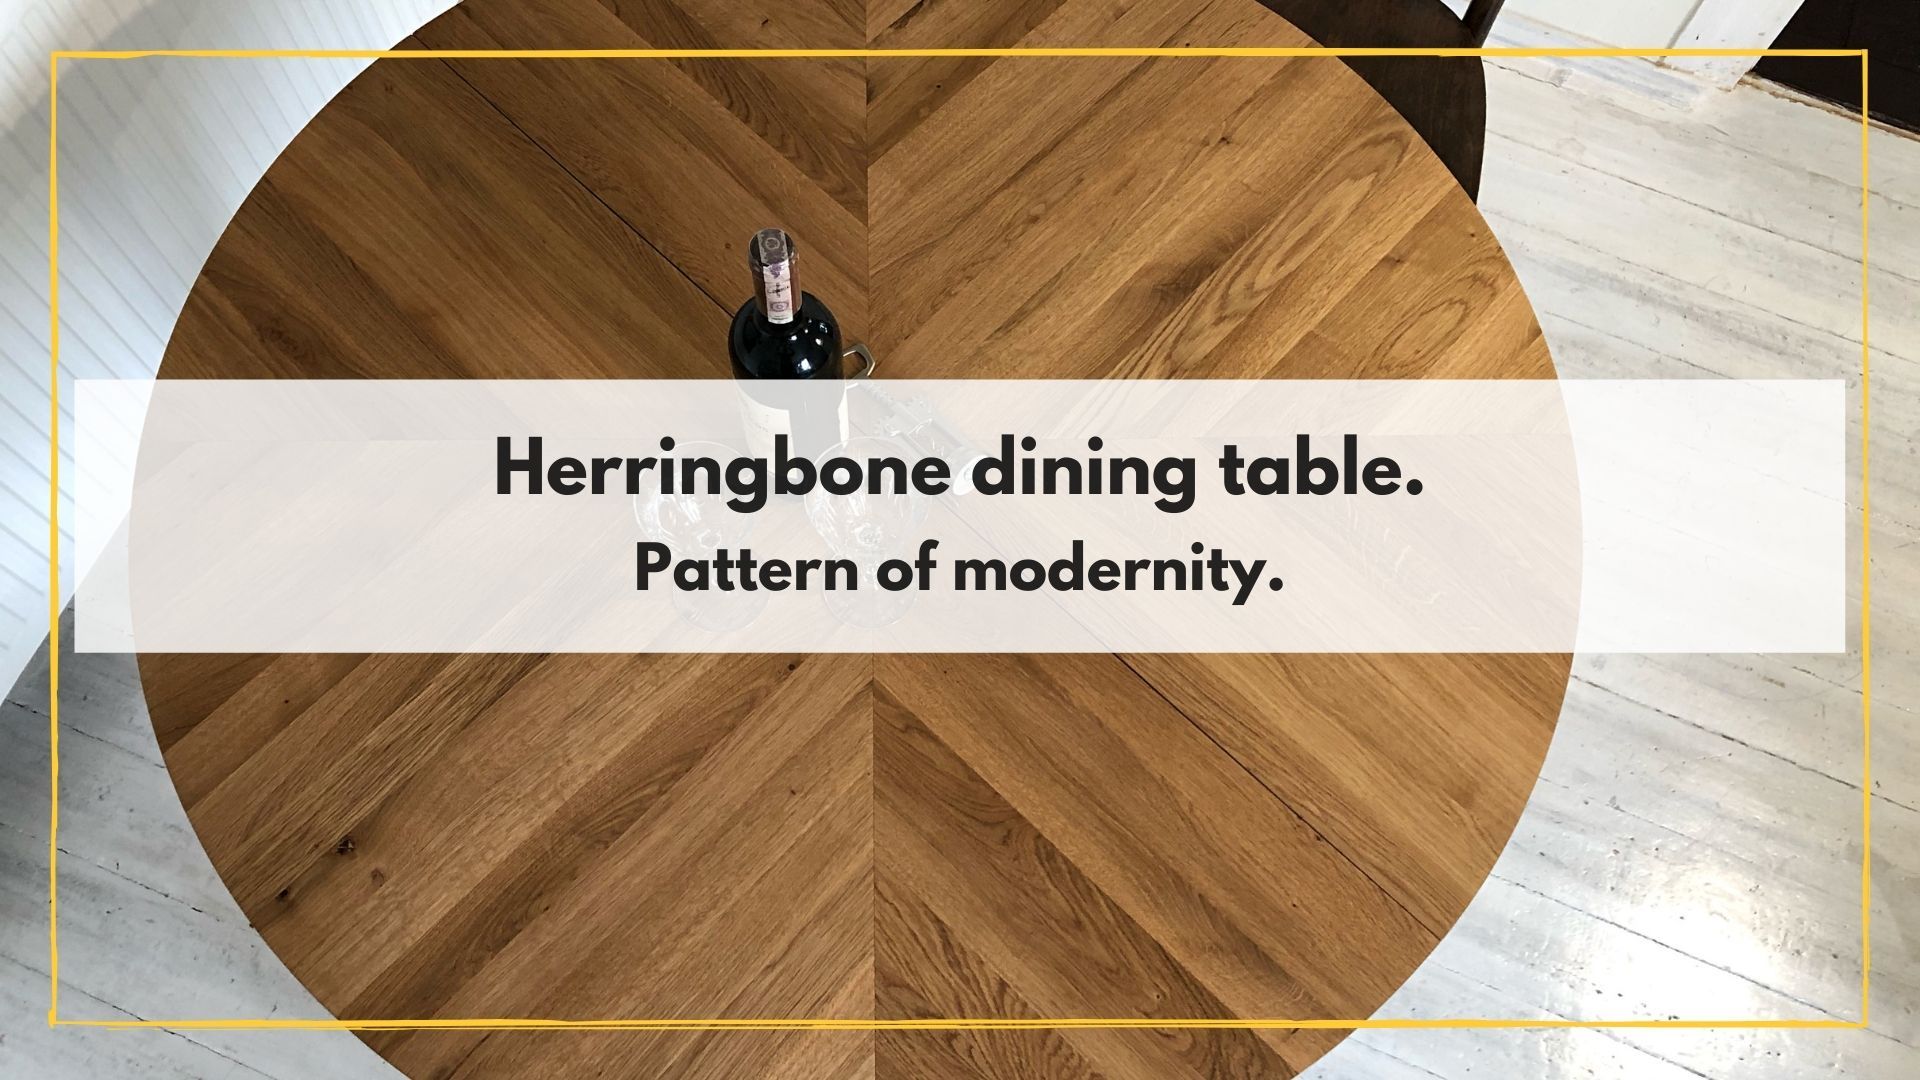 Herringbone dining table article